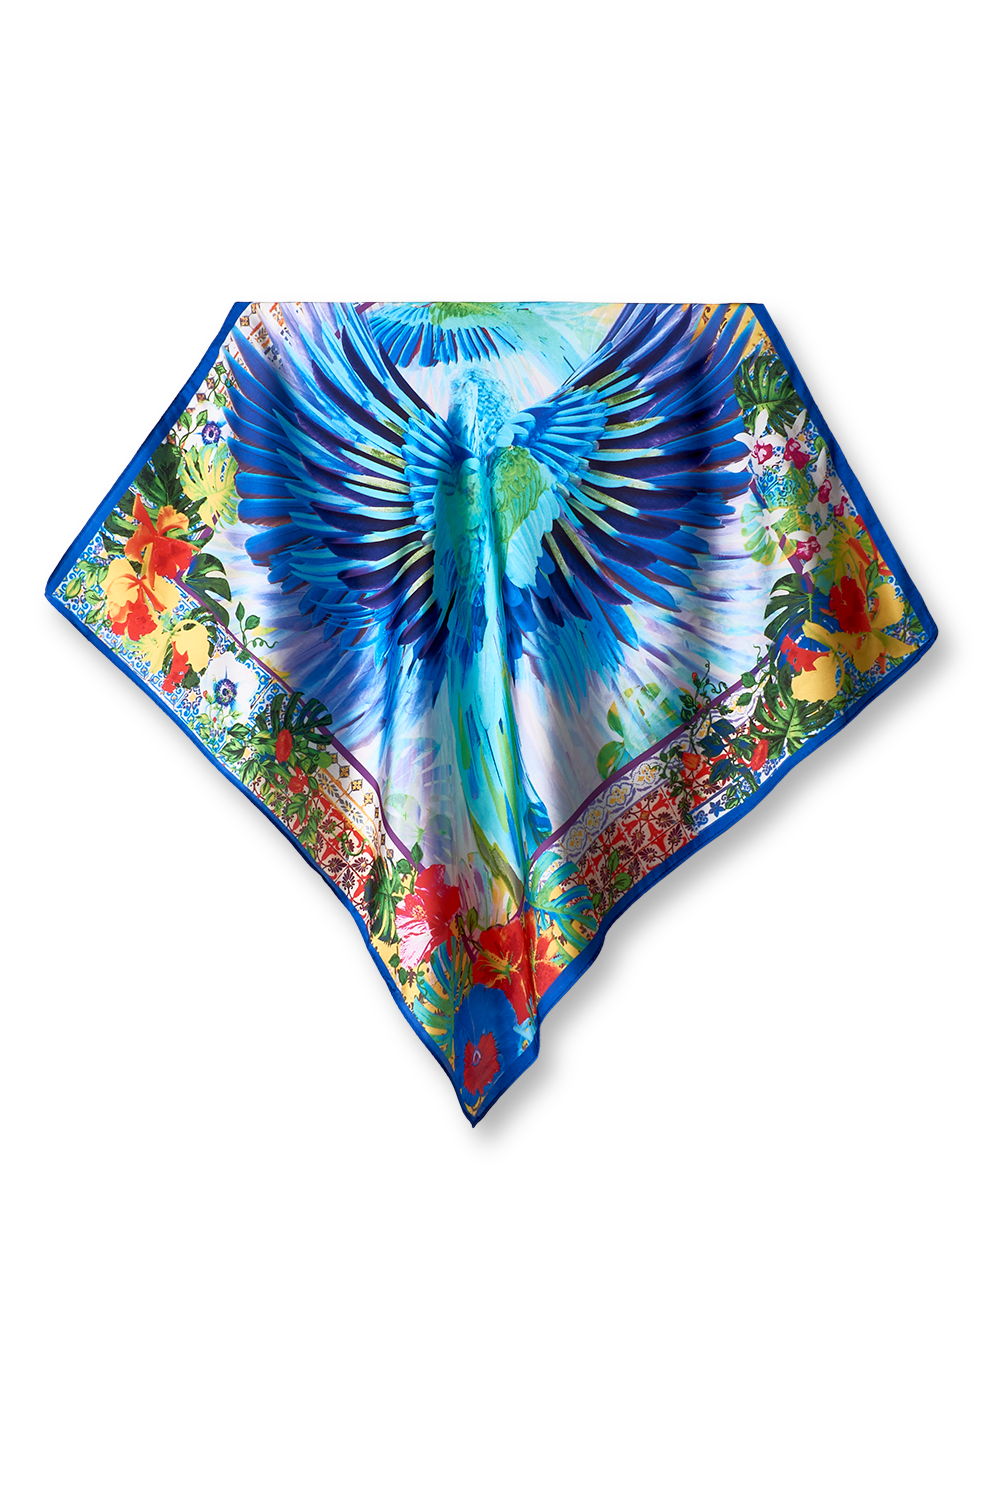 Lenço Arara-azul multicolor em cetim poliéster | 50x50cm